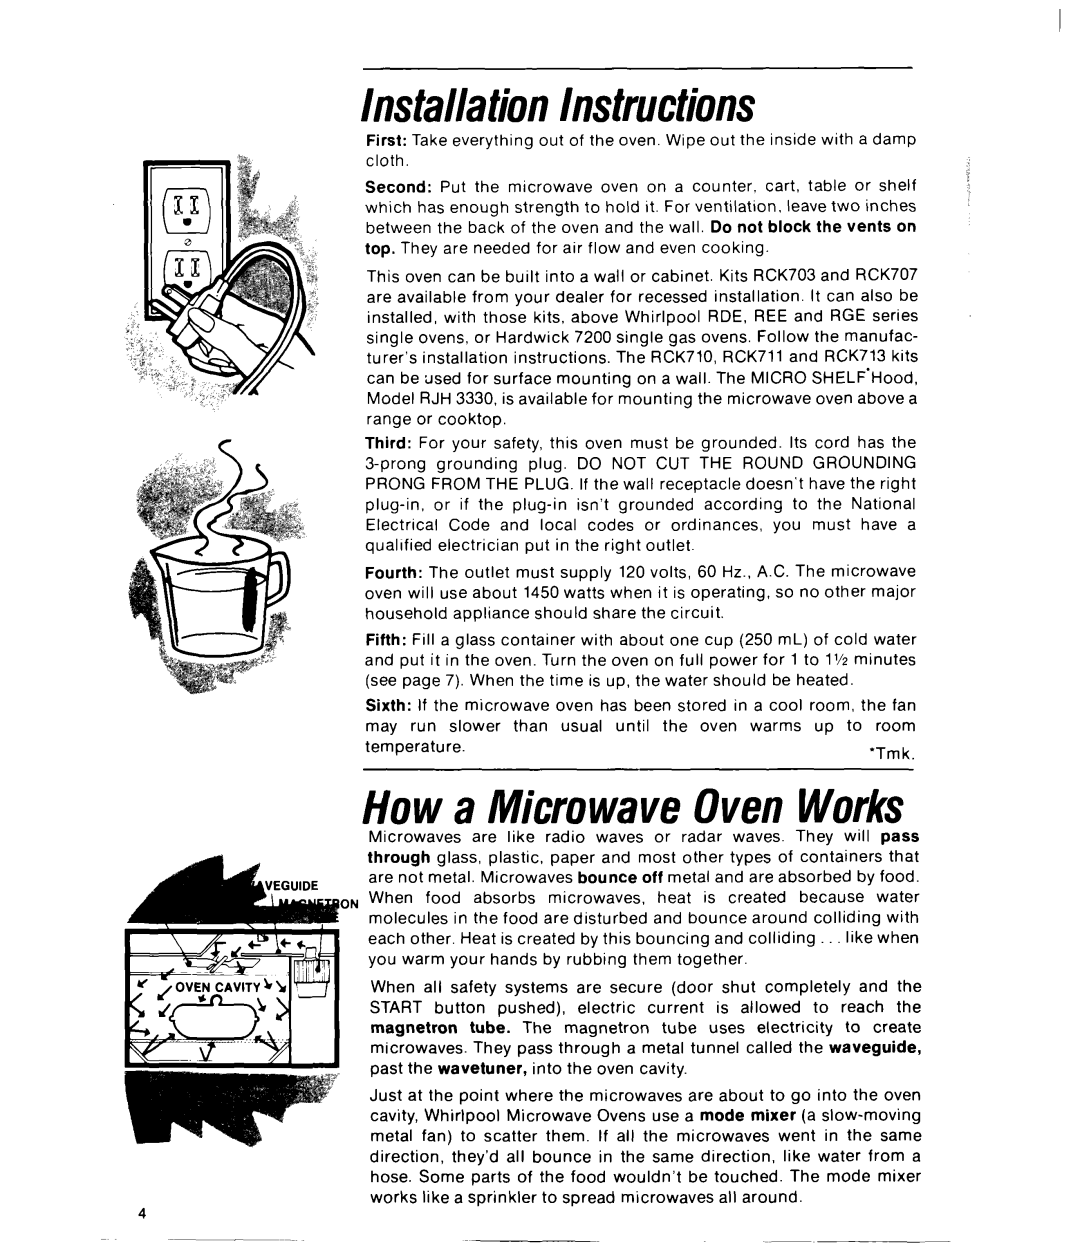 Whirlpool RJM 7500 manual lnstallationInstructions, How a MicrowaveOvenWorks 